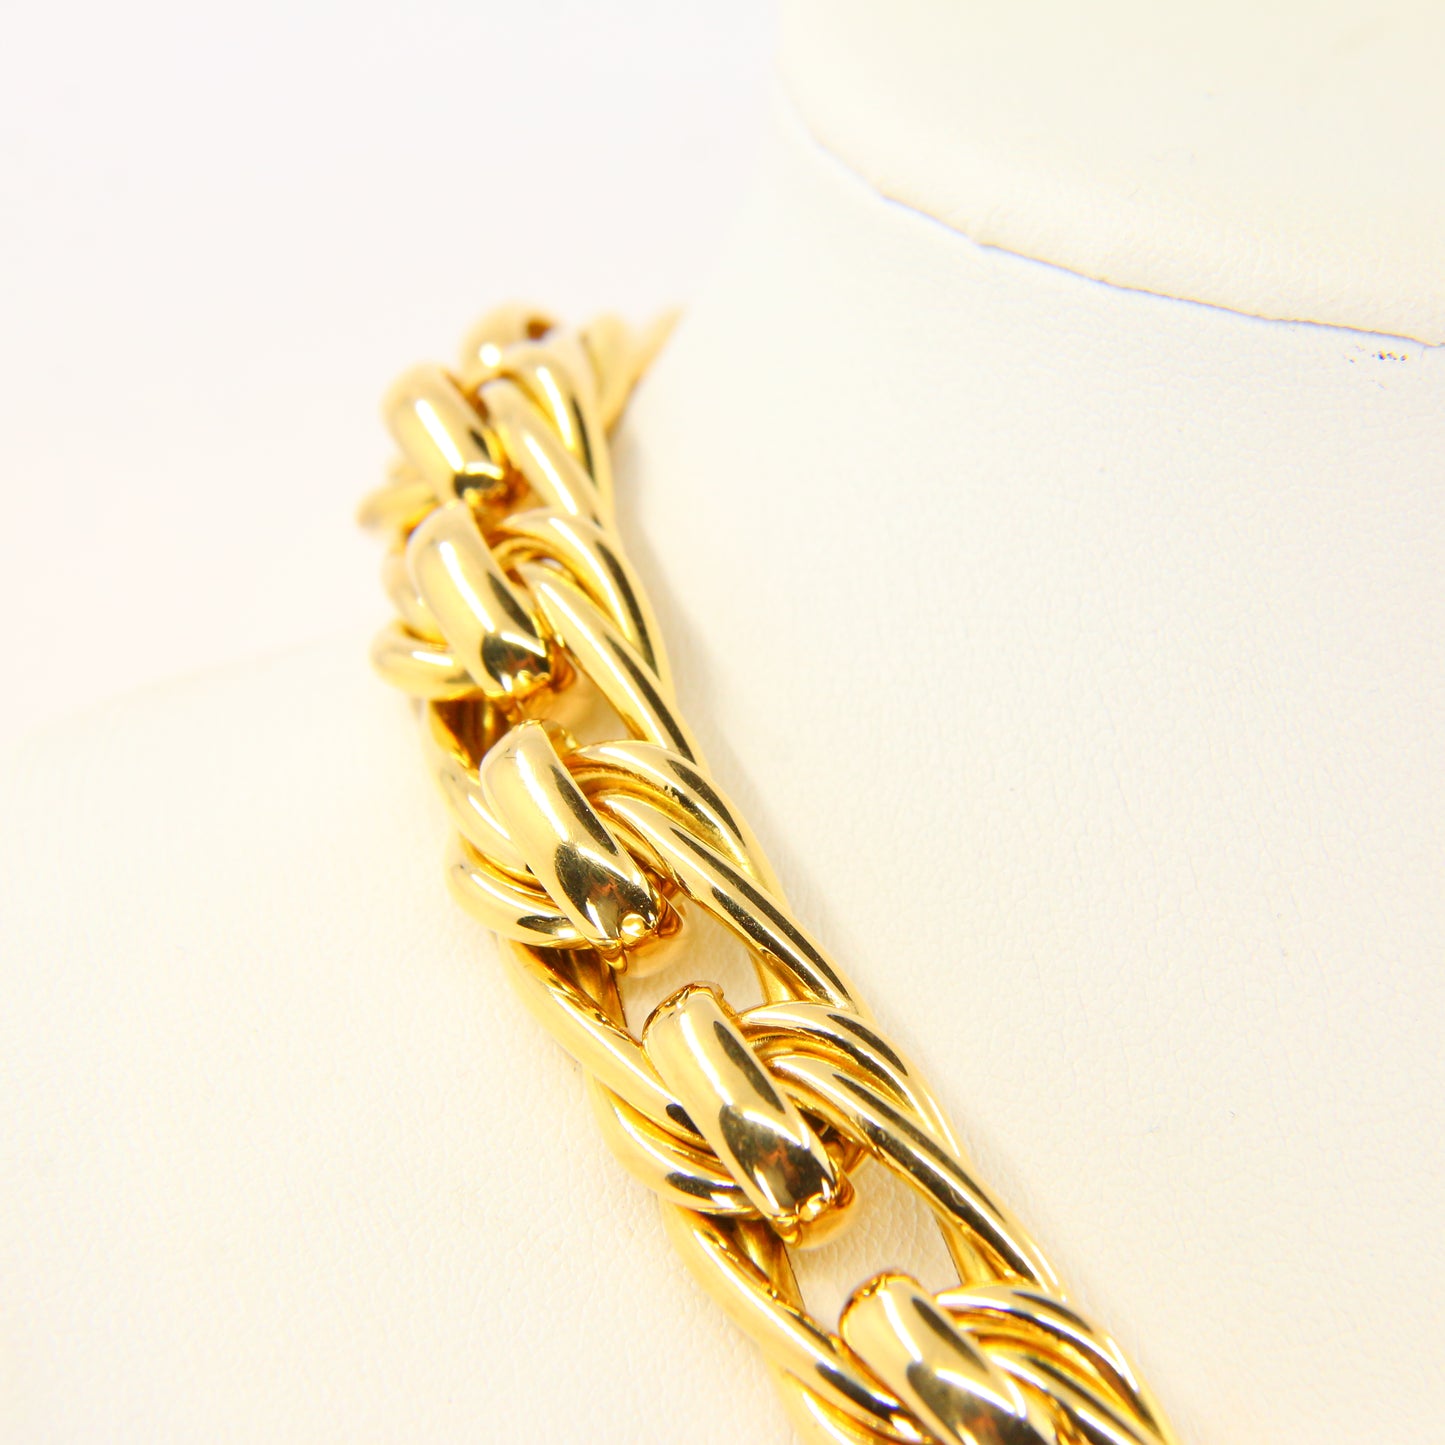 Vintage 18ct Heavy Yellow Gold Necklace British Hallmarked Gold Chain Necklace